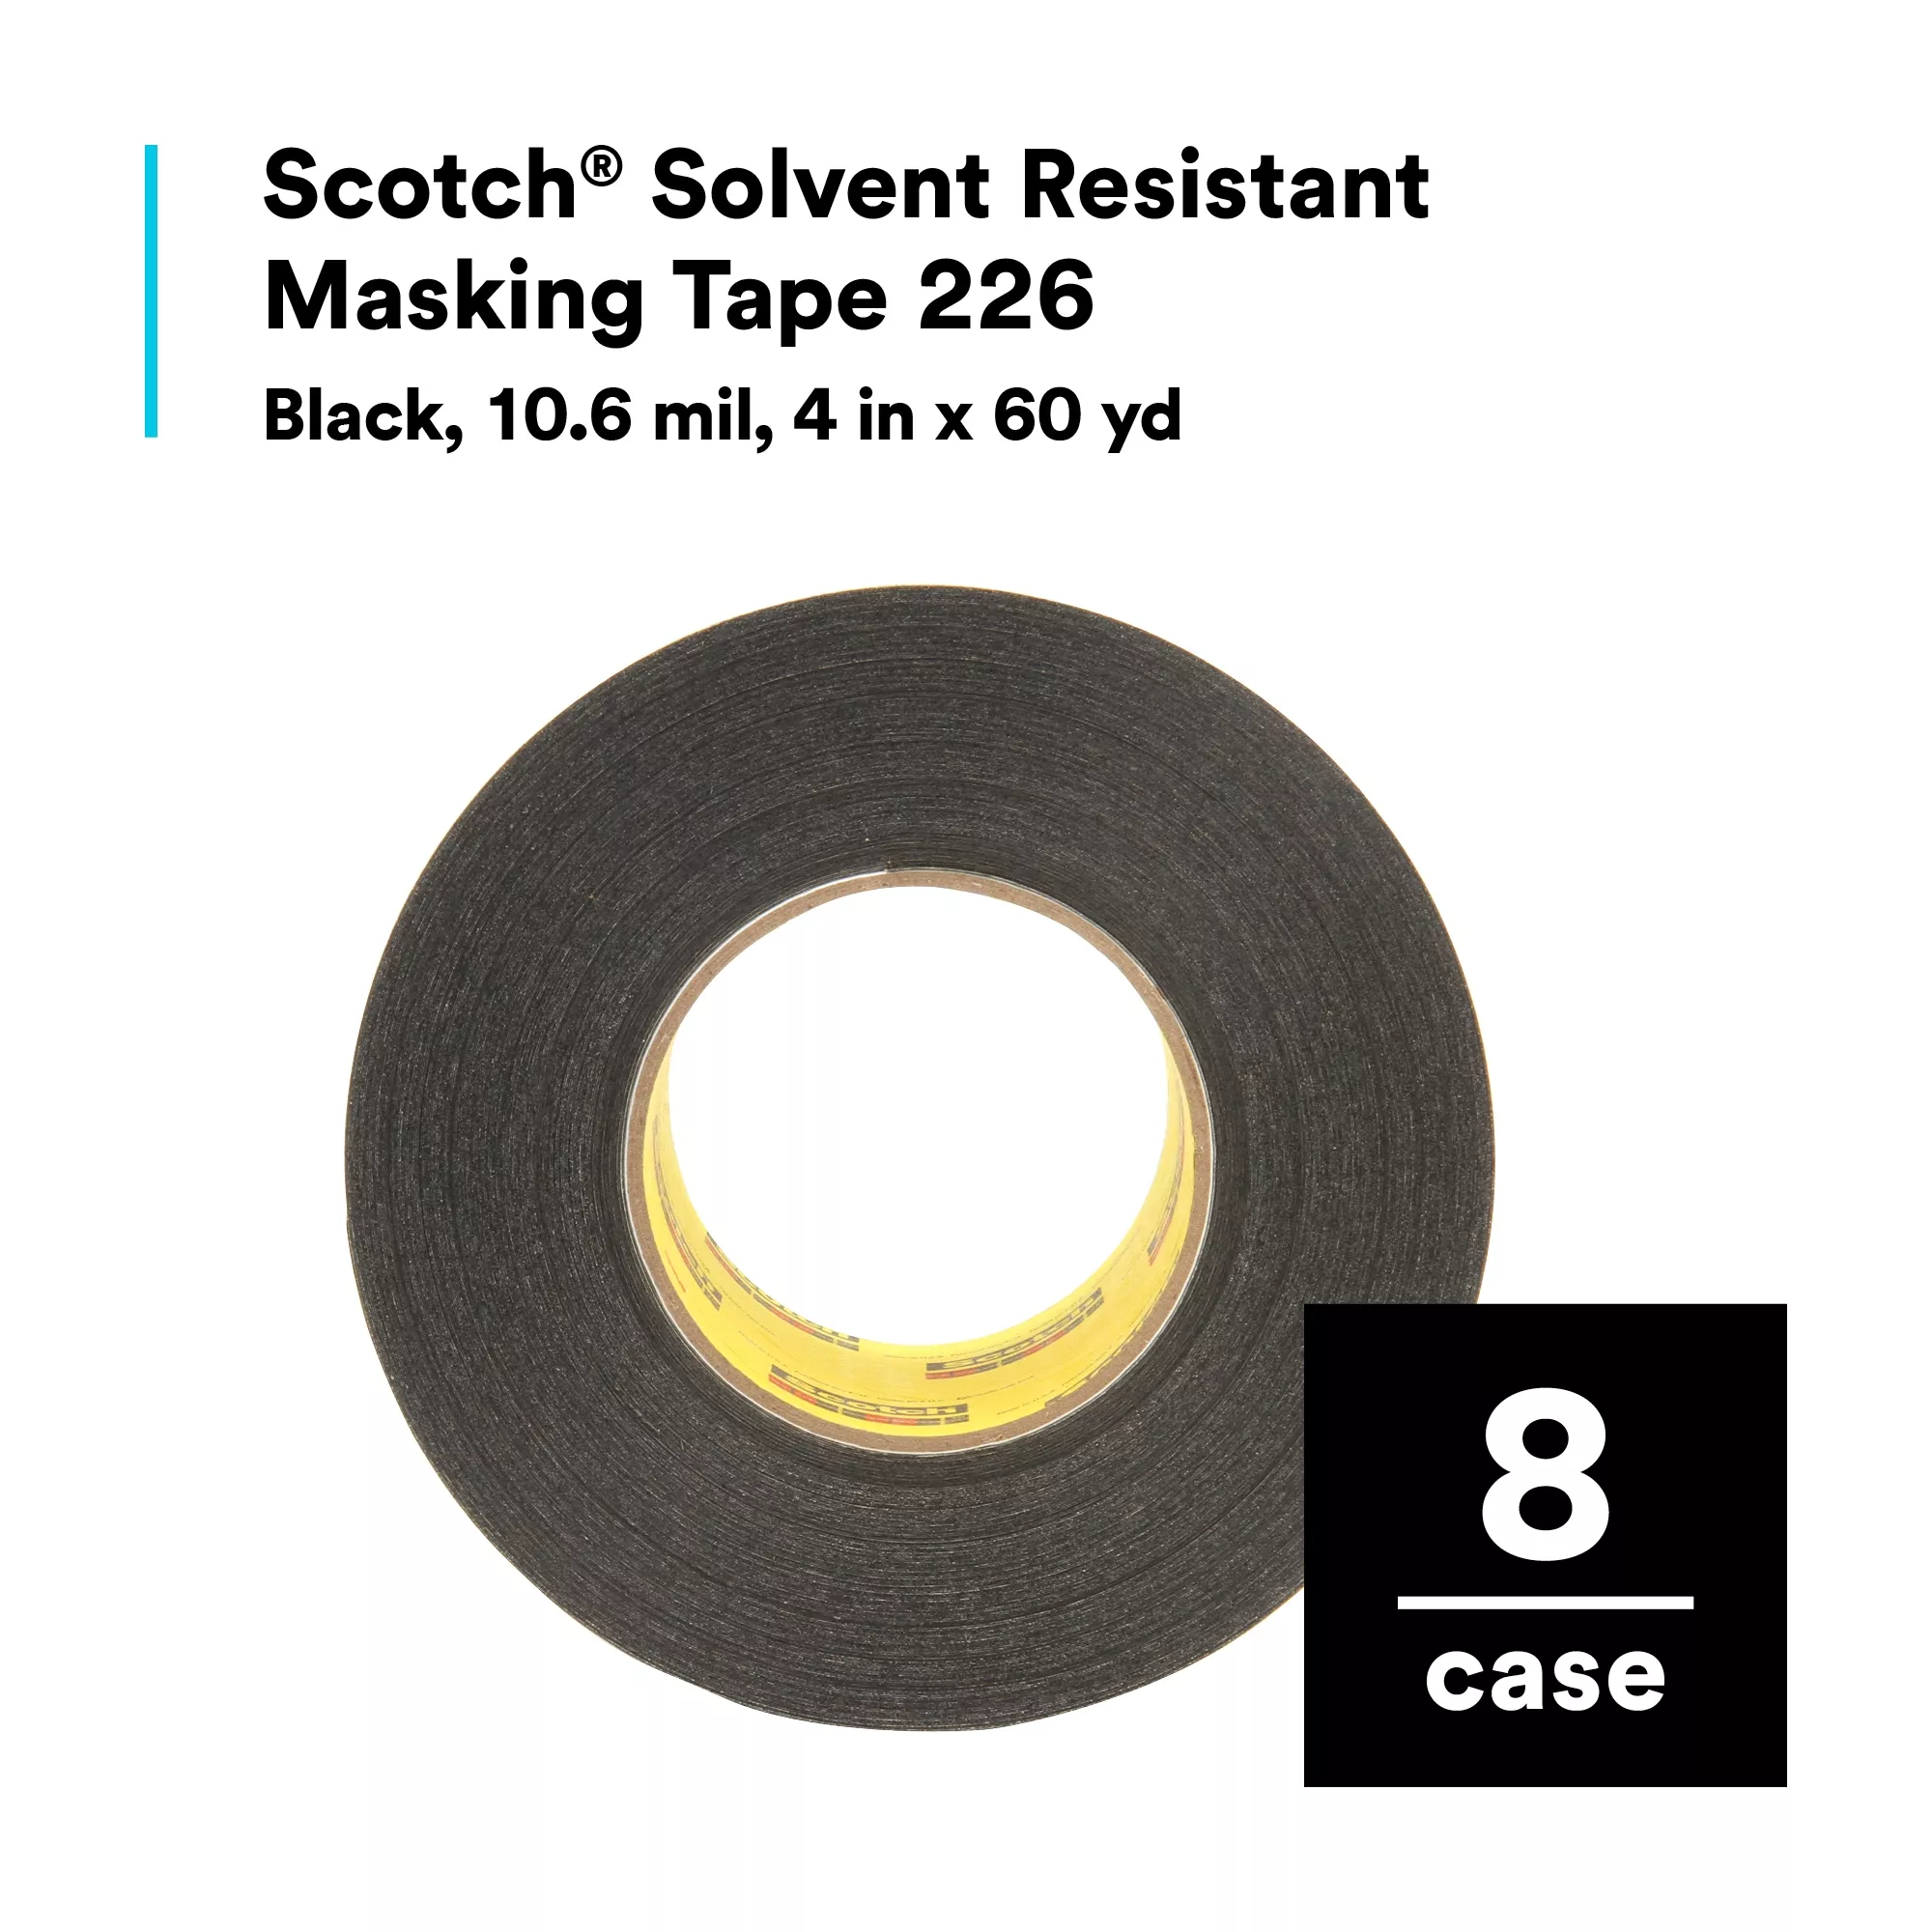 SKU 7000123577 | Scotch® Solvent Resistant Masking Tape 226